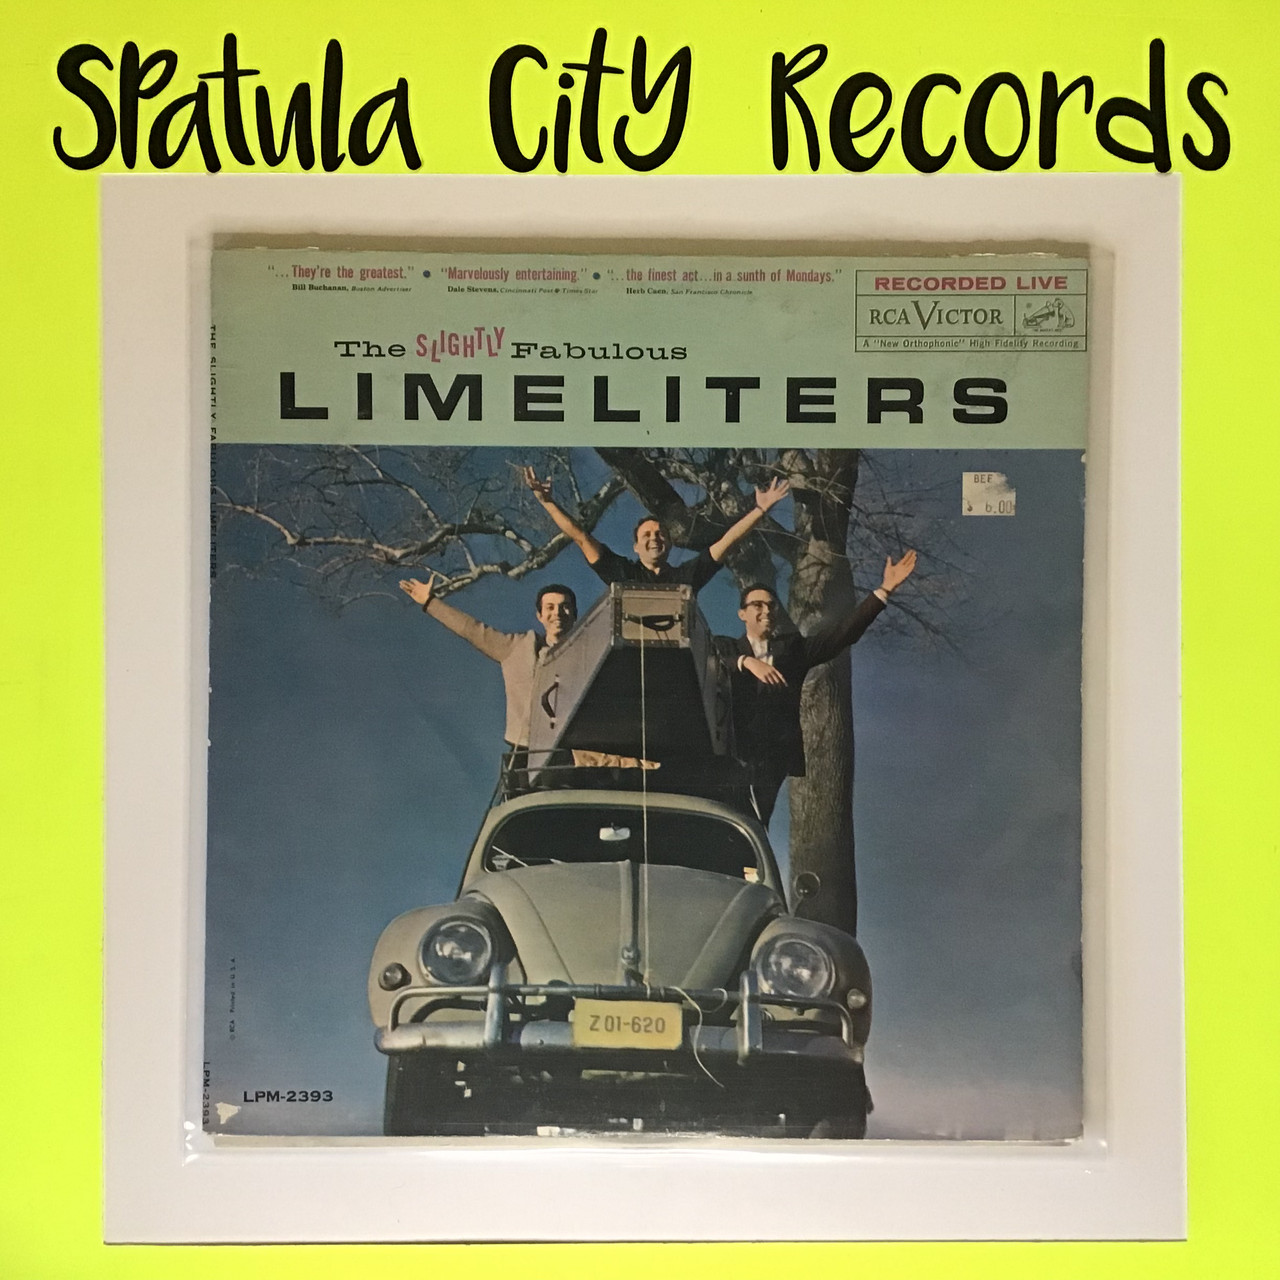 The Limeliters - The Slightly Fabulous Limeliters - MONO - vinyl record album LP